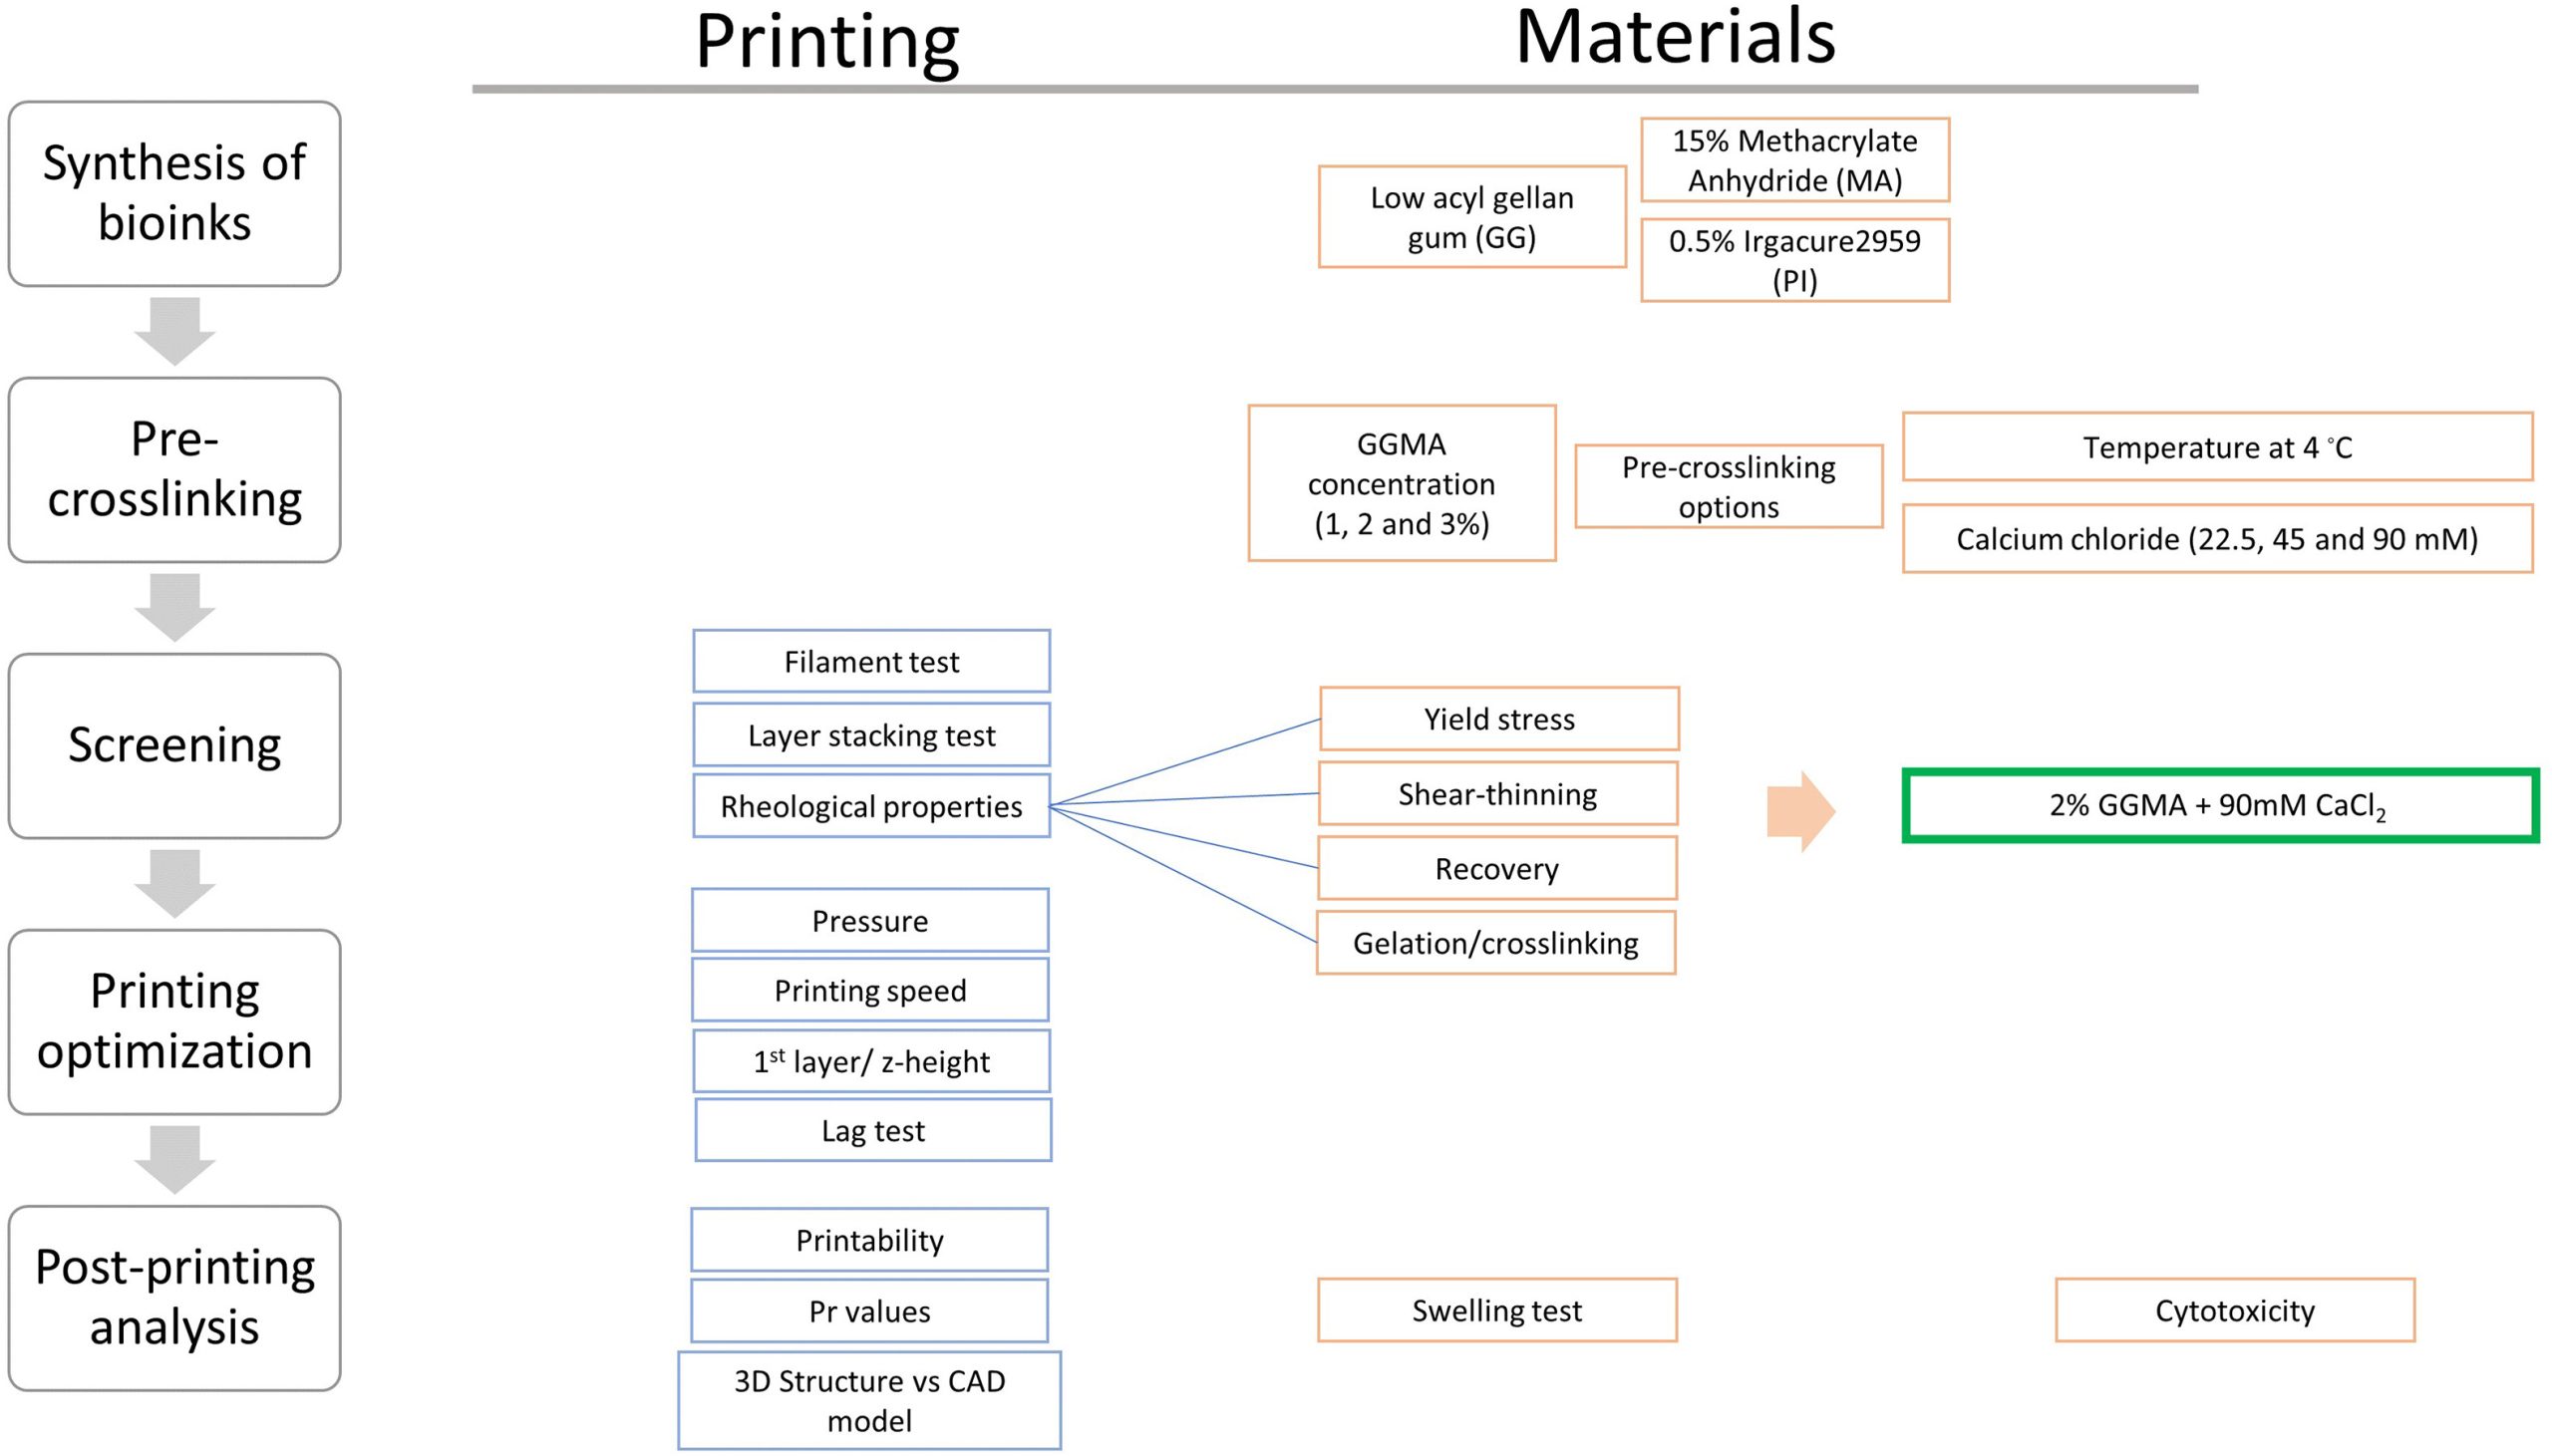 Evaluation of GGMA biomaterial ink and development process. Image via Biomaterials.